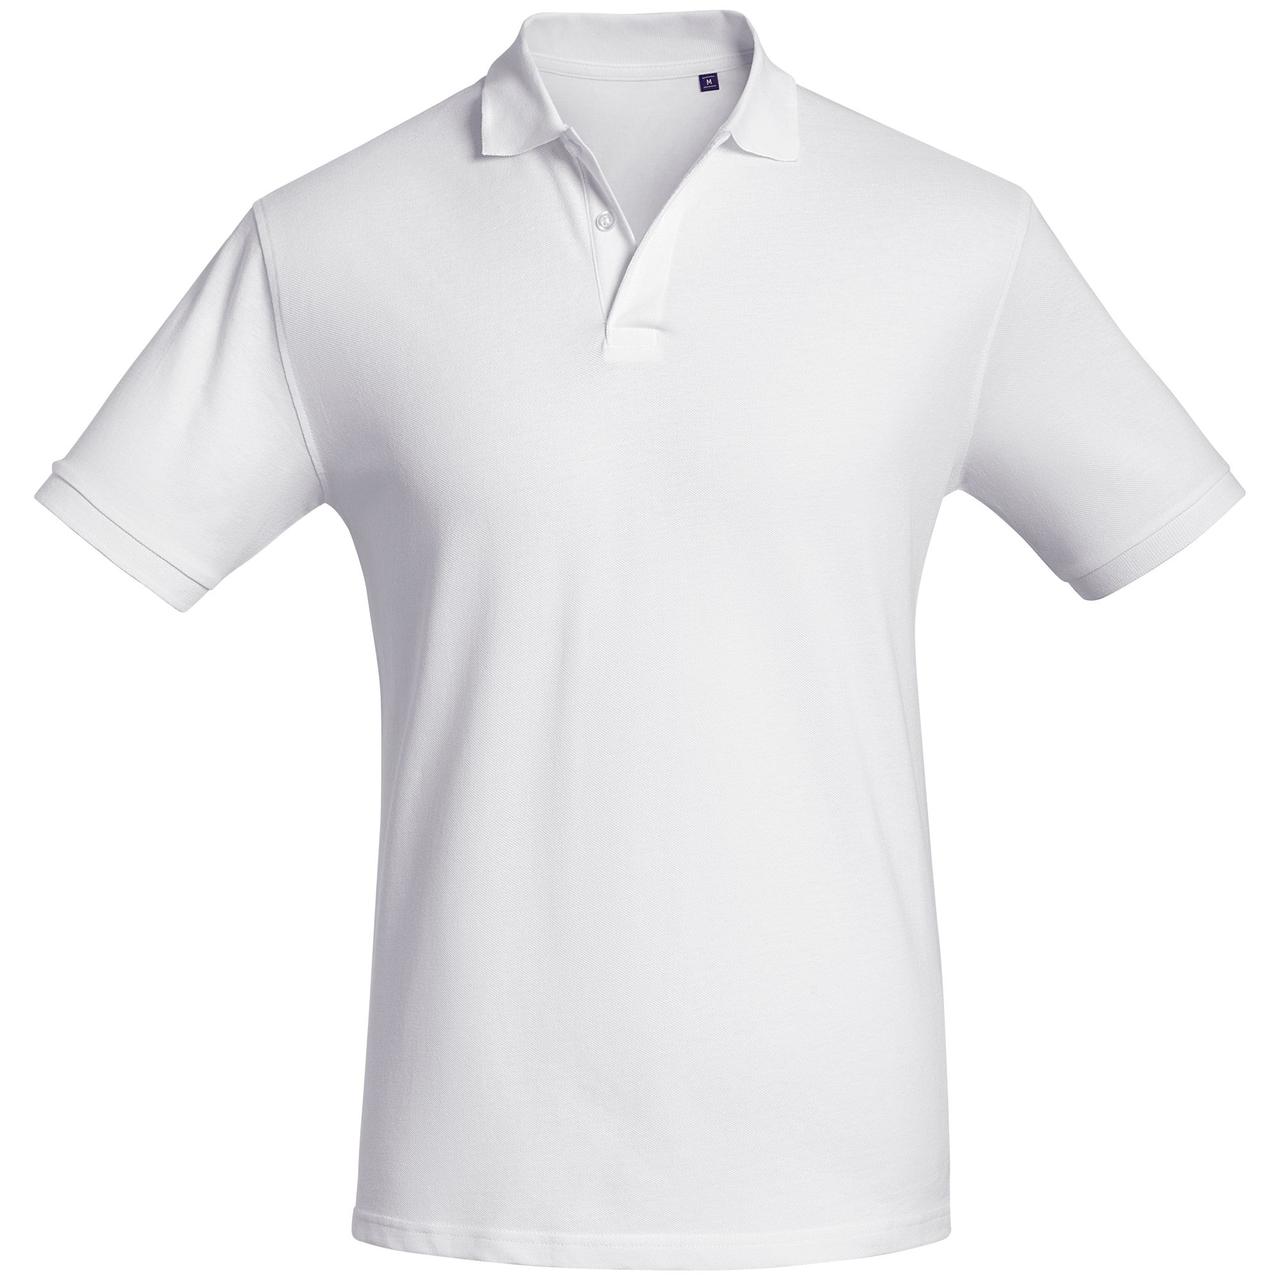 Рубашка поло мужская Inspire, белая (артикул PM430001)